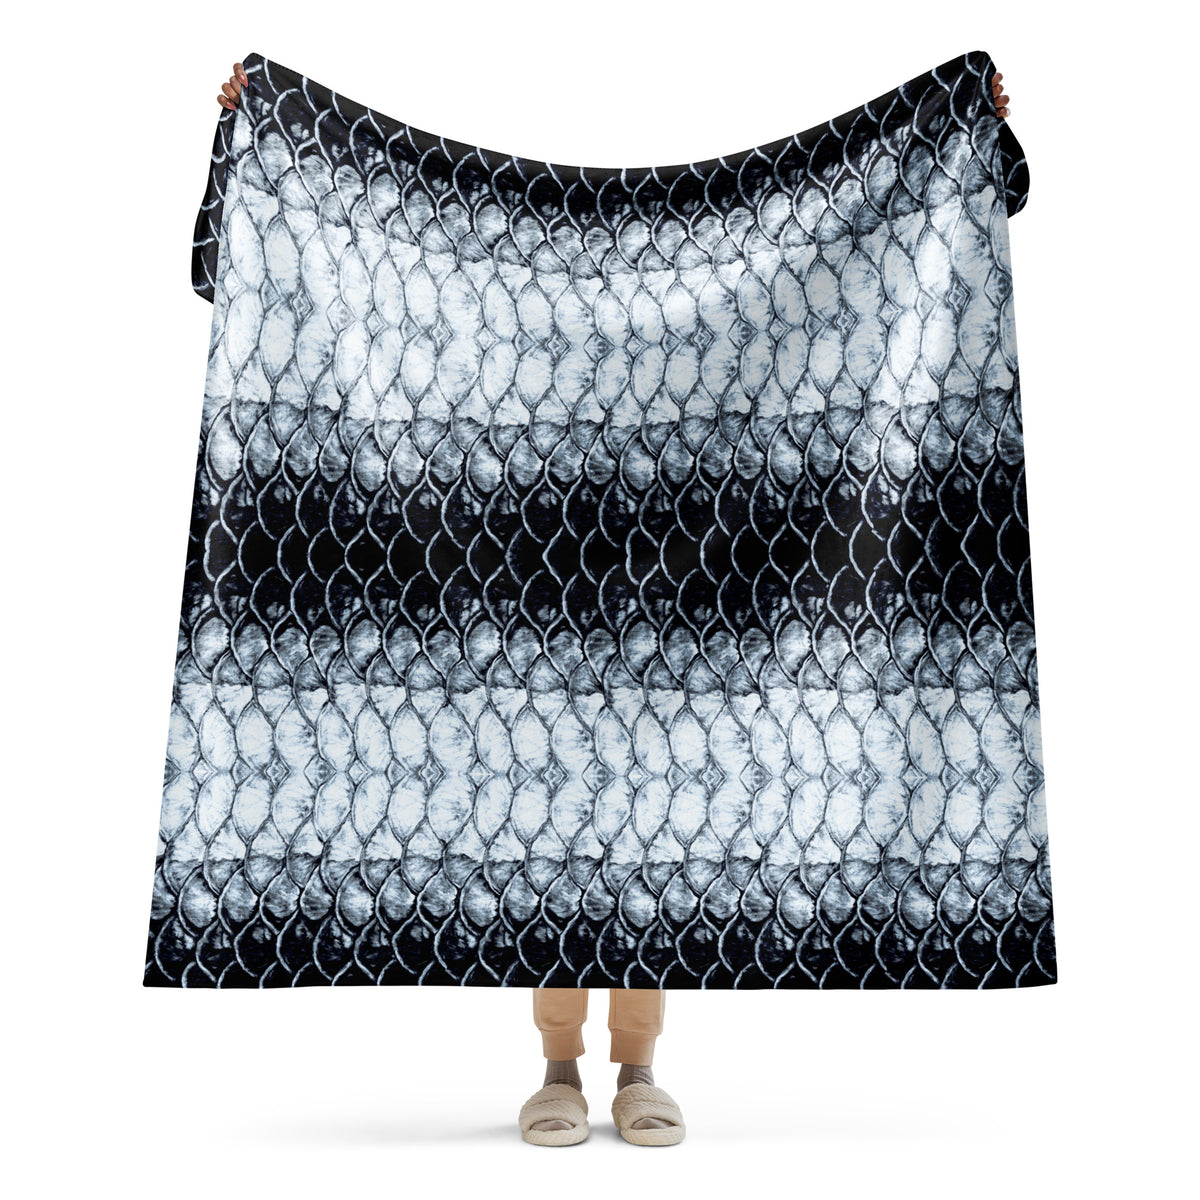 Tarpon Scales - Sherpa blanket [Multiple Sizes + FREE SHIPPING]